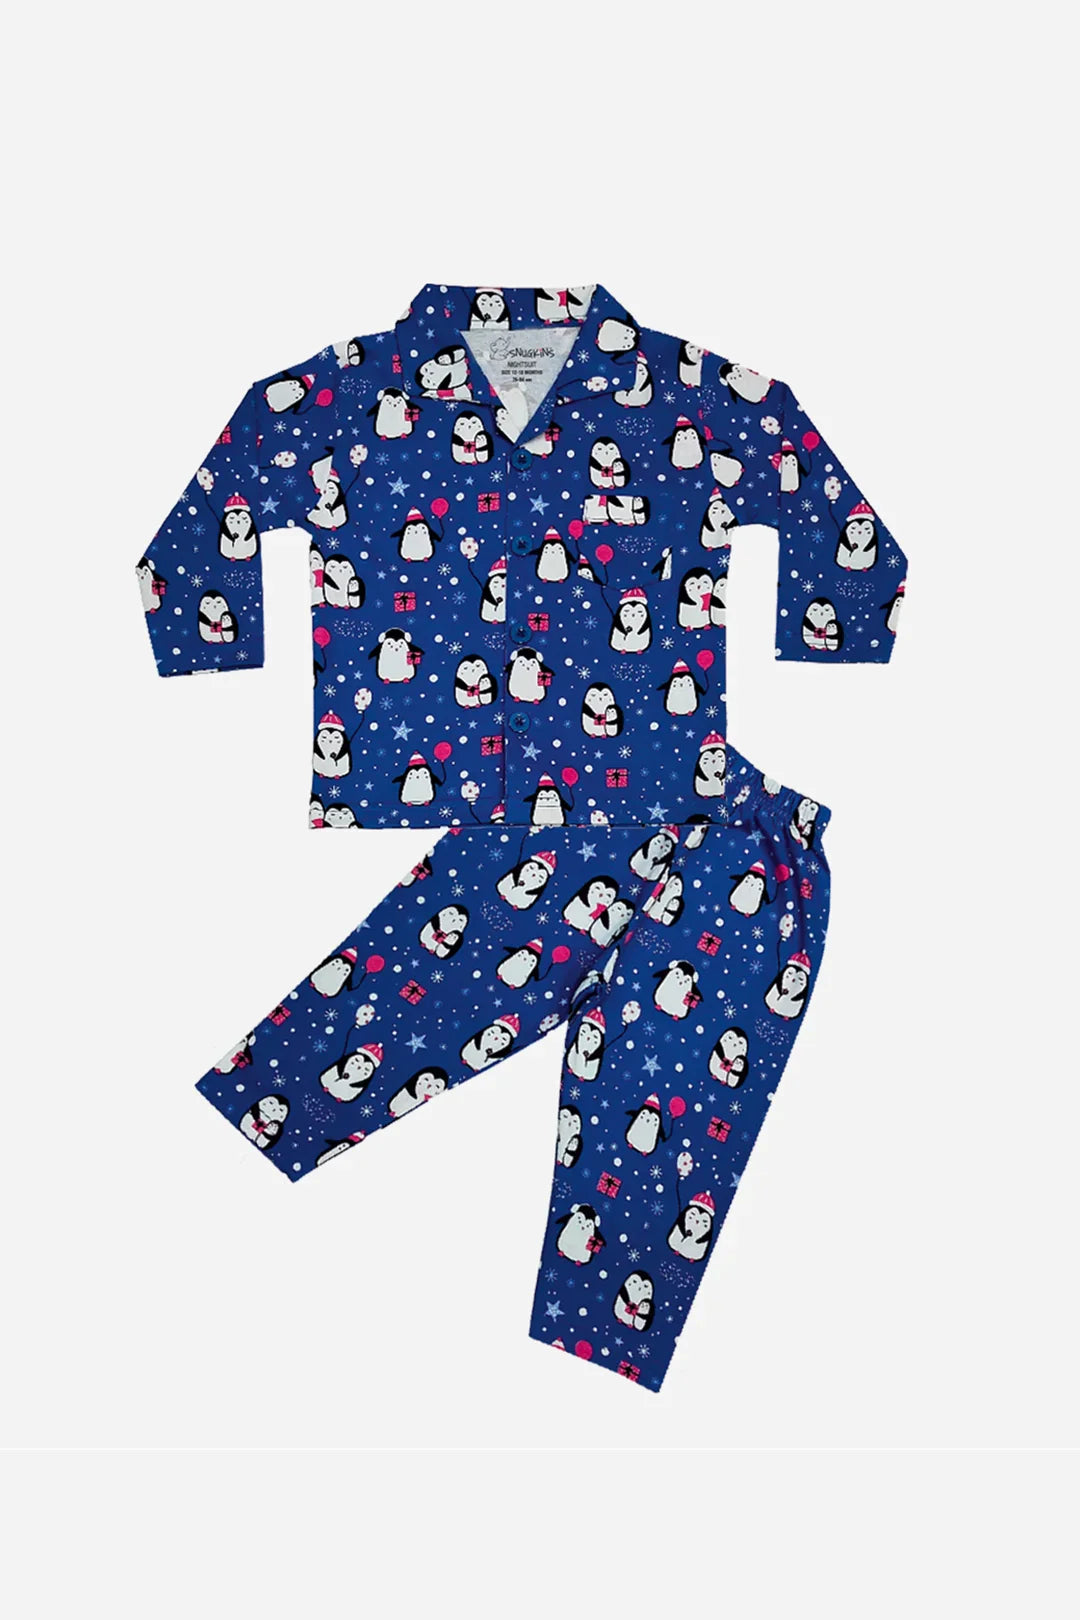 Full Sleeves Baby Penguin Printed Pajamas - Sleep Wear for Baby/Kids - Boys and Girls